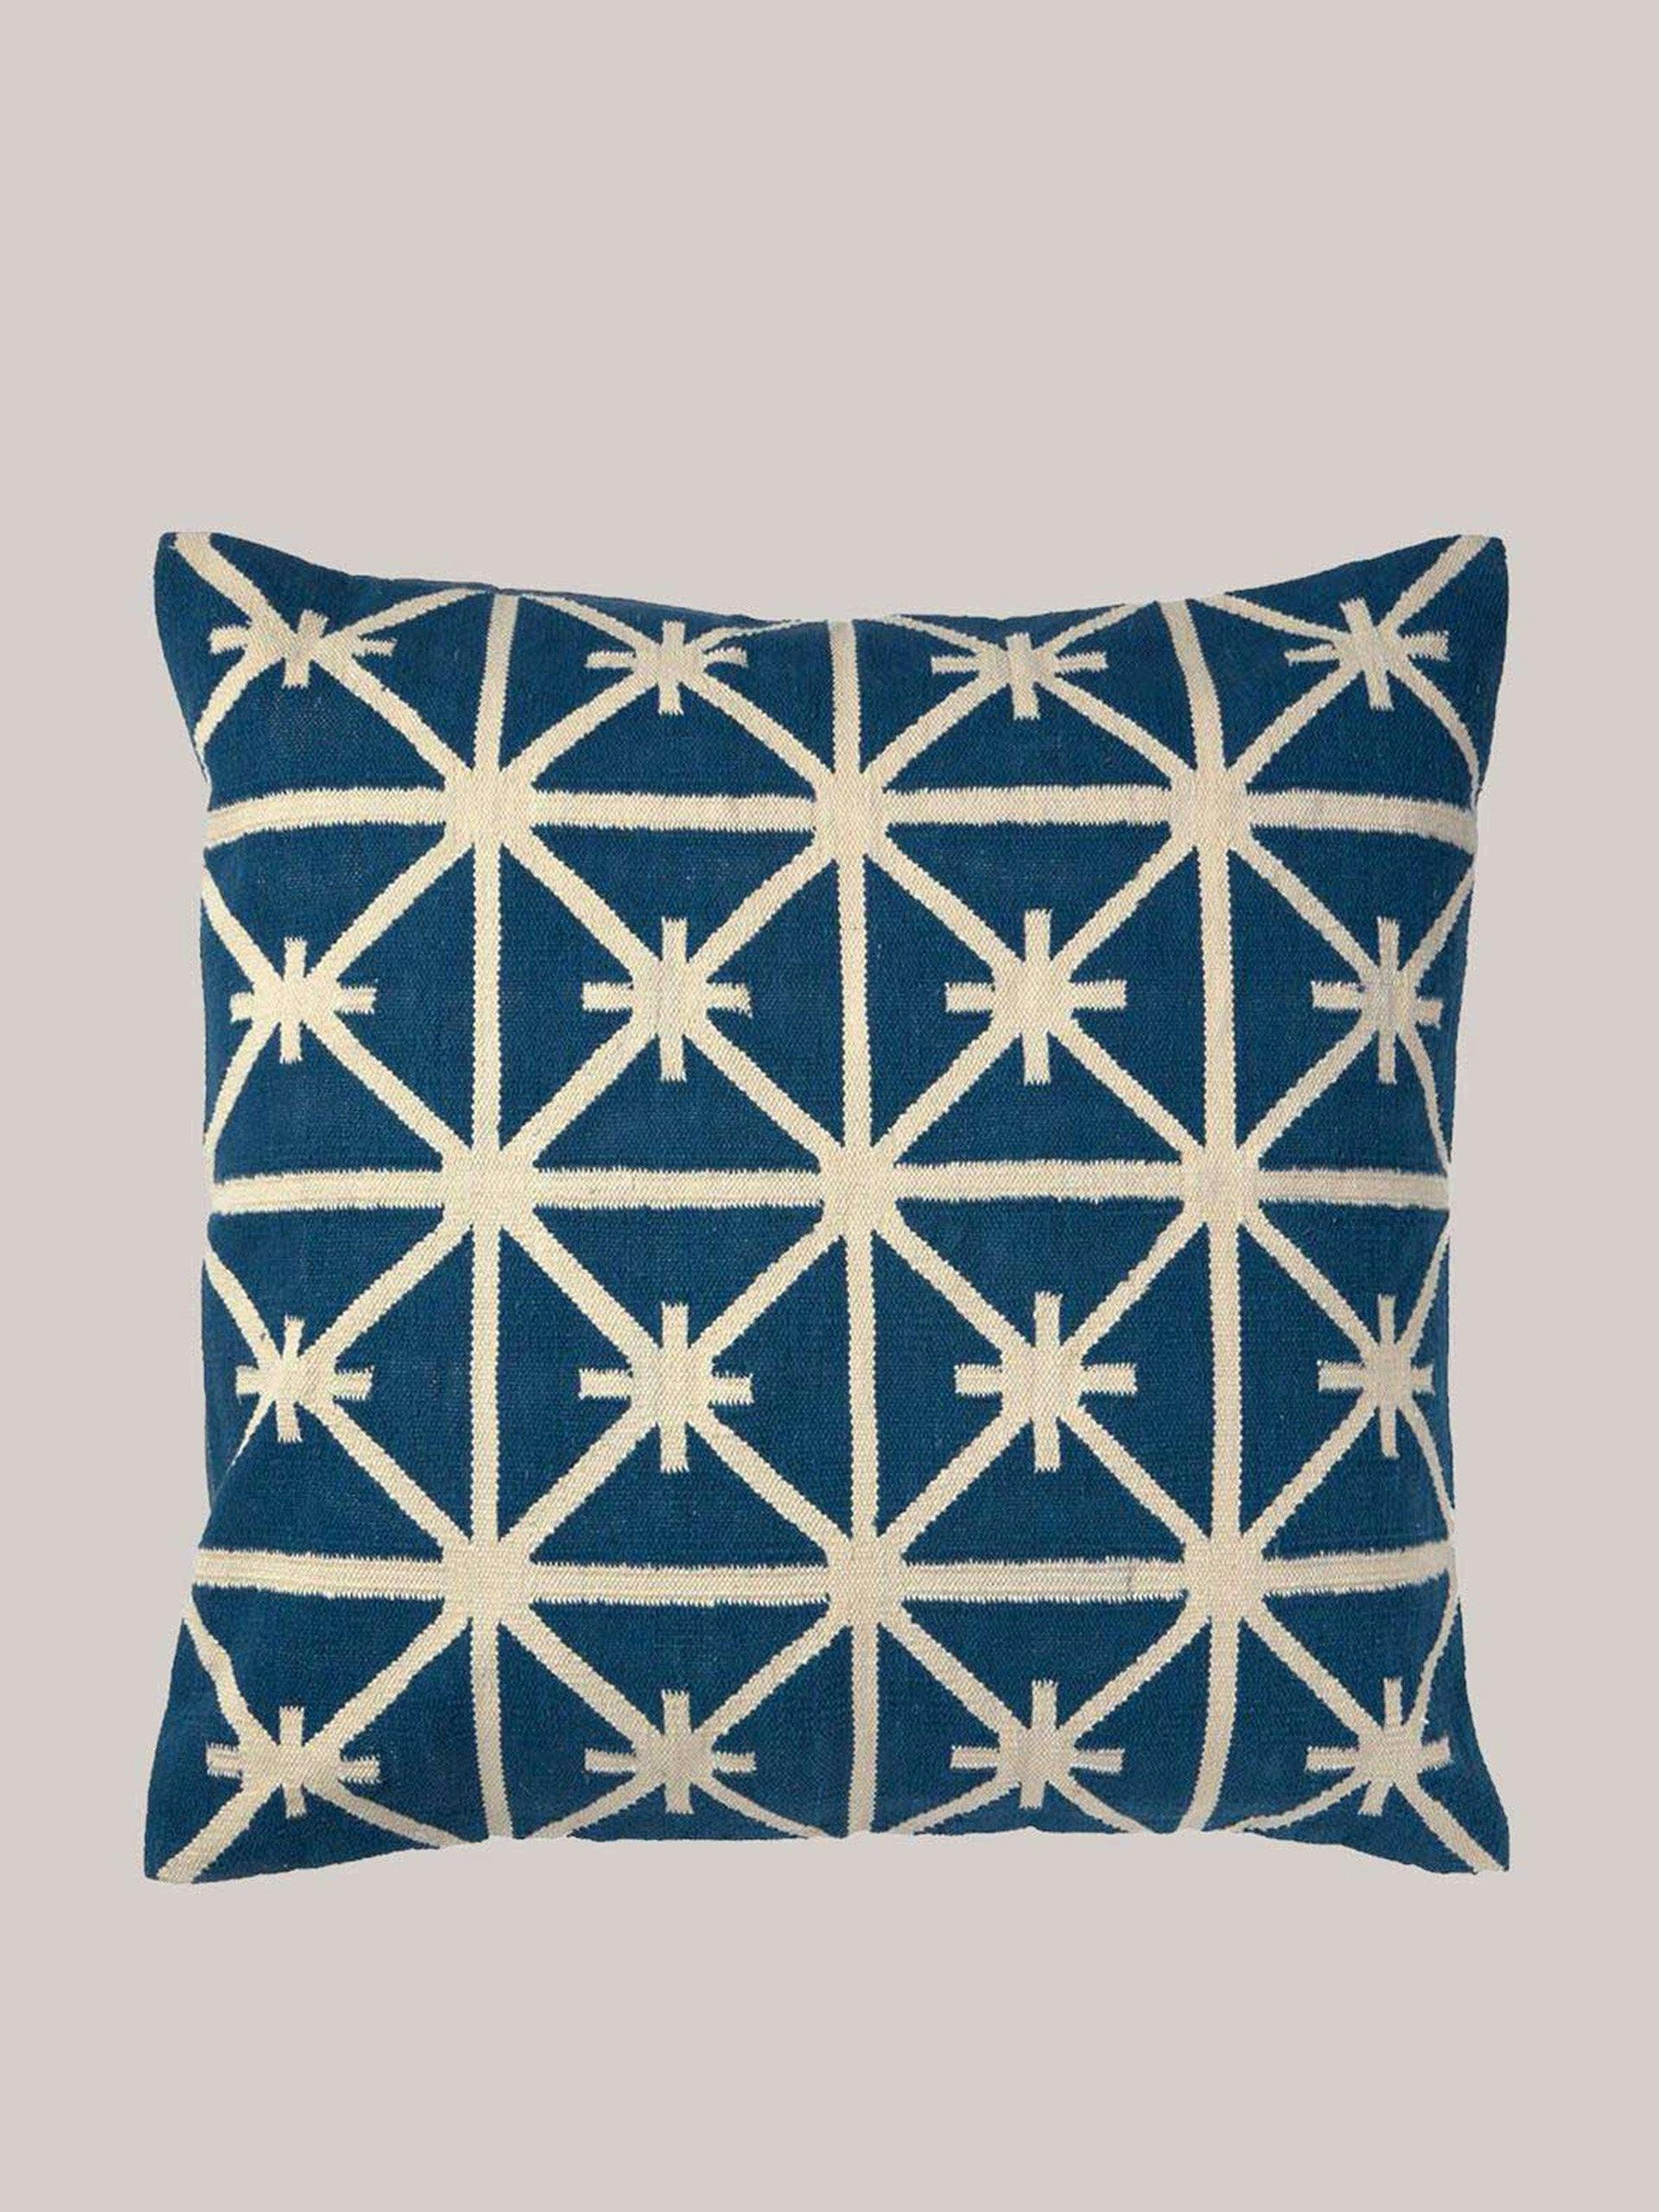 Hawthorn cotton dhurrie large blue floor cushion cover